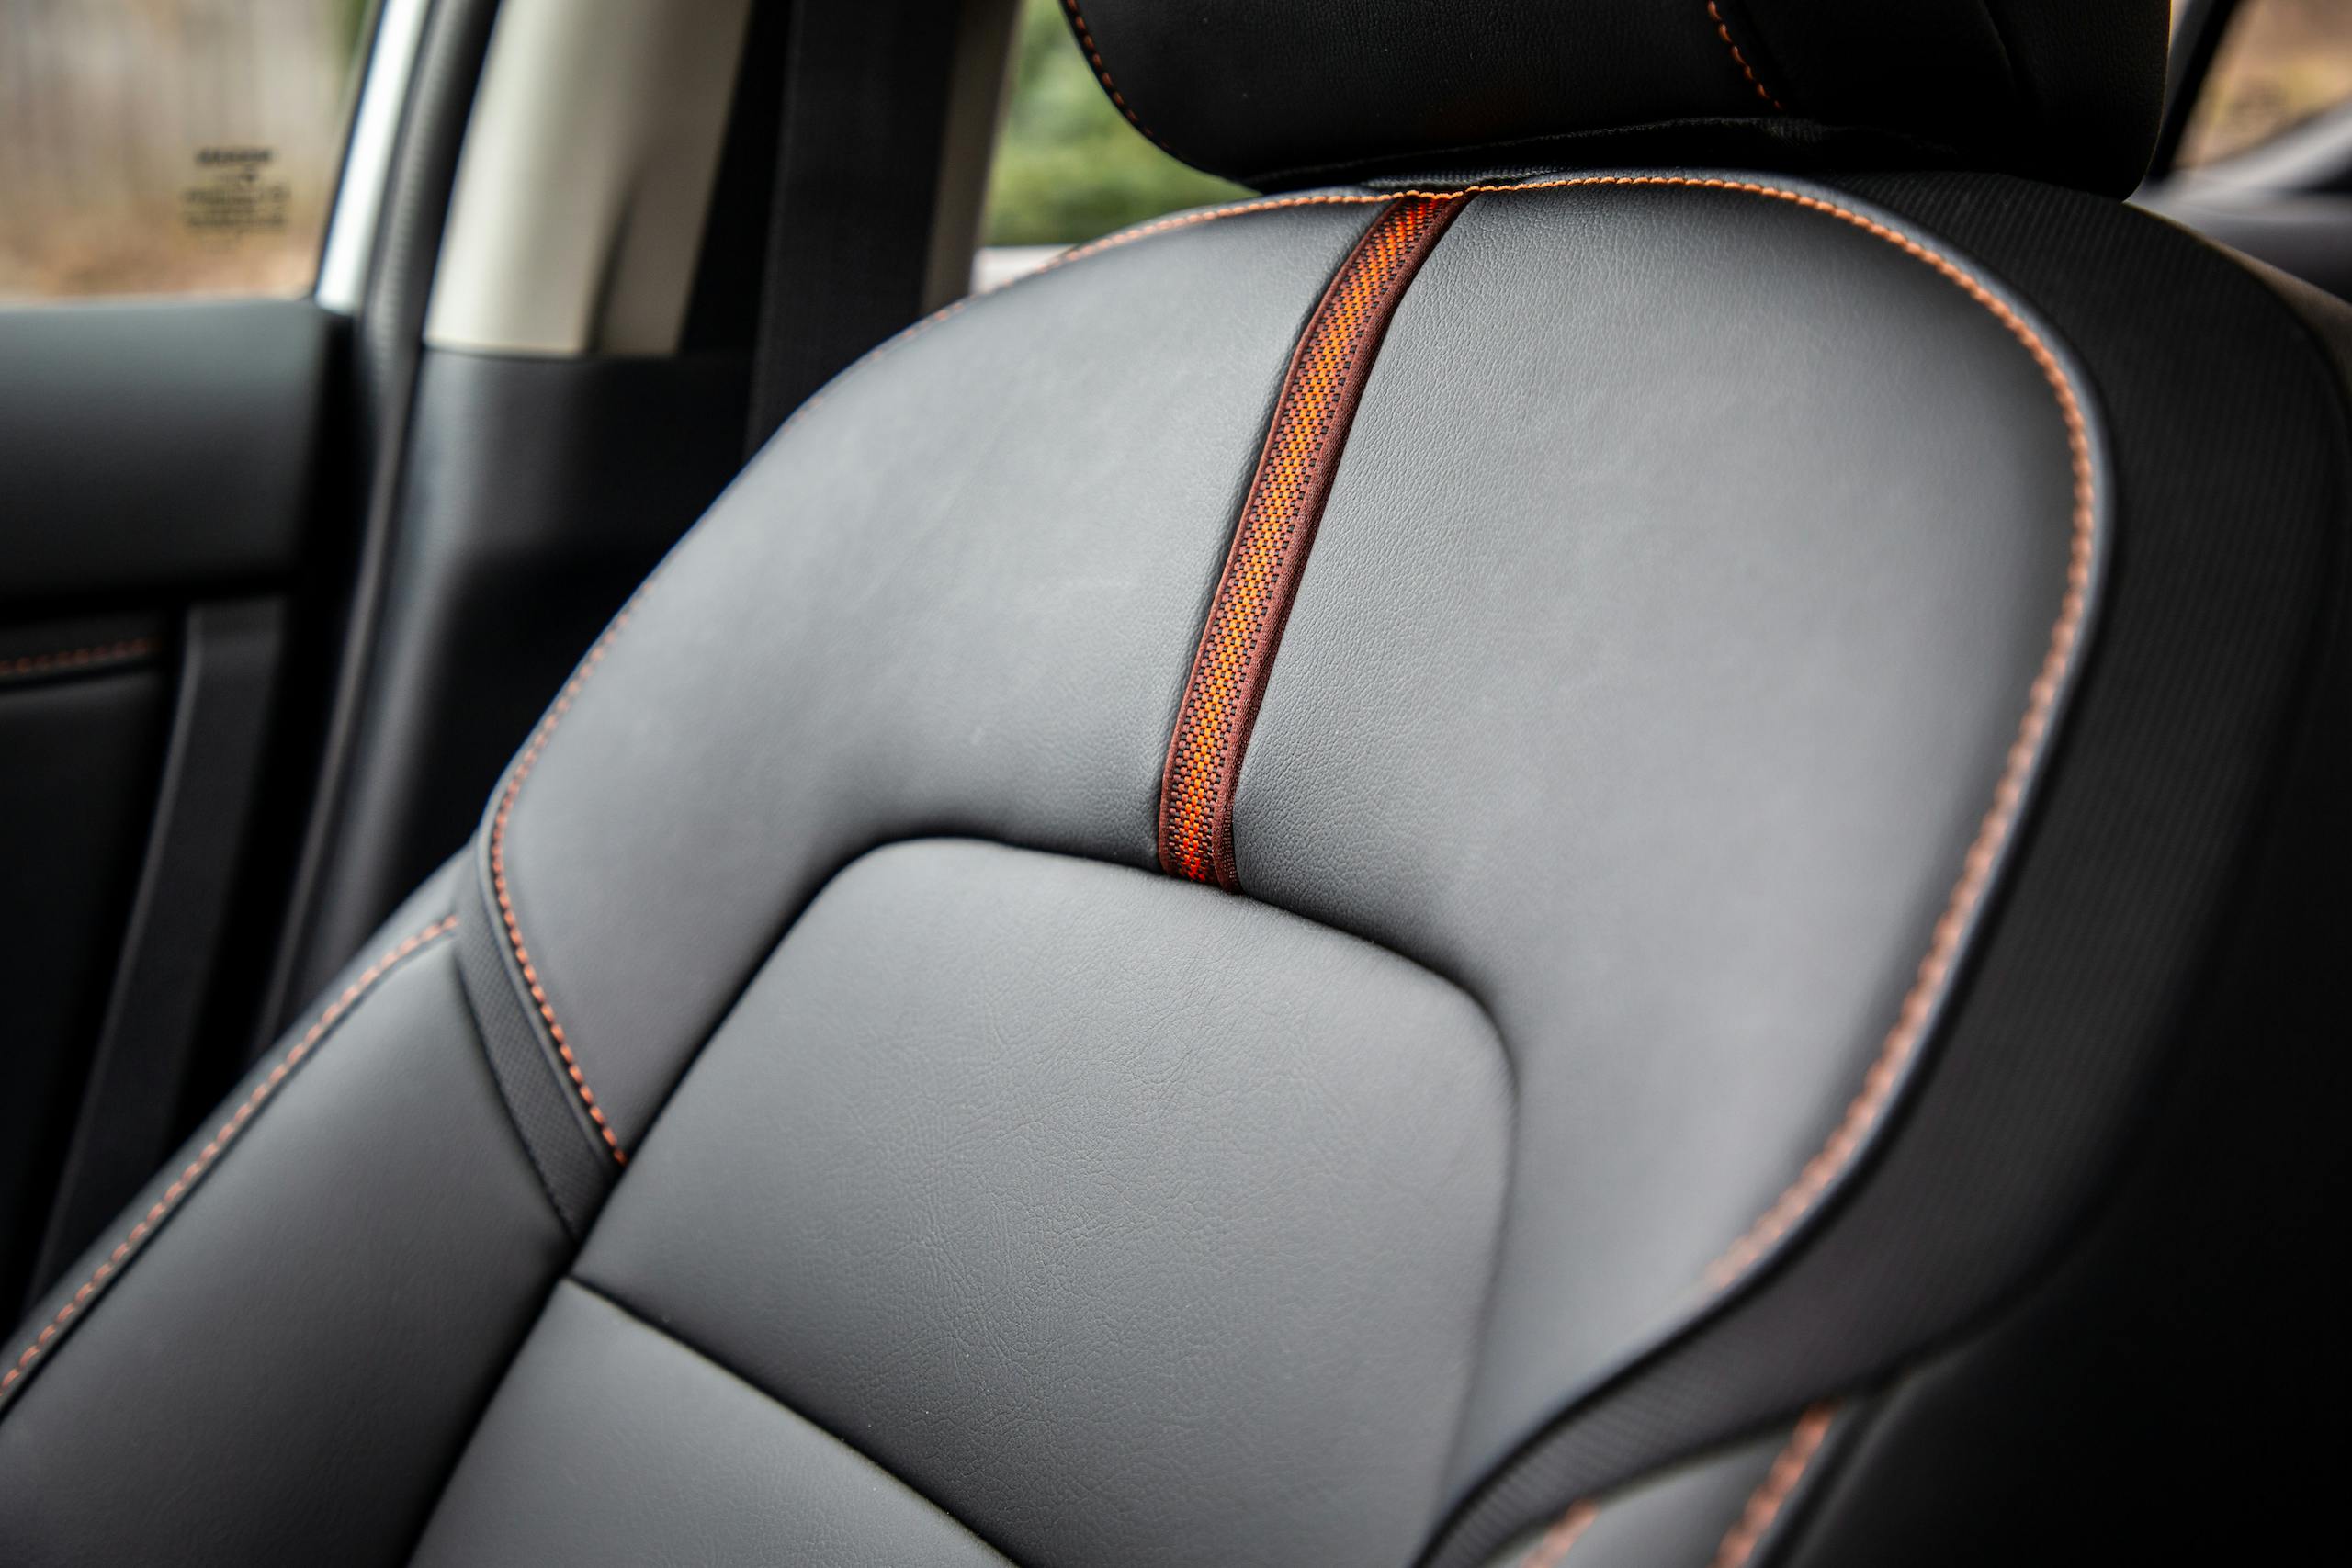 2022 Nissan Sentra SR interior seat material detail